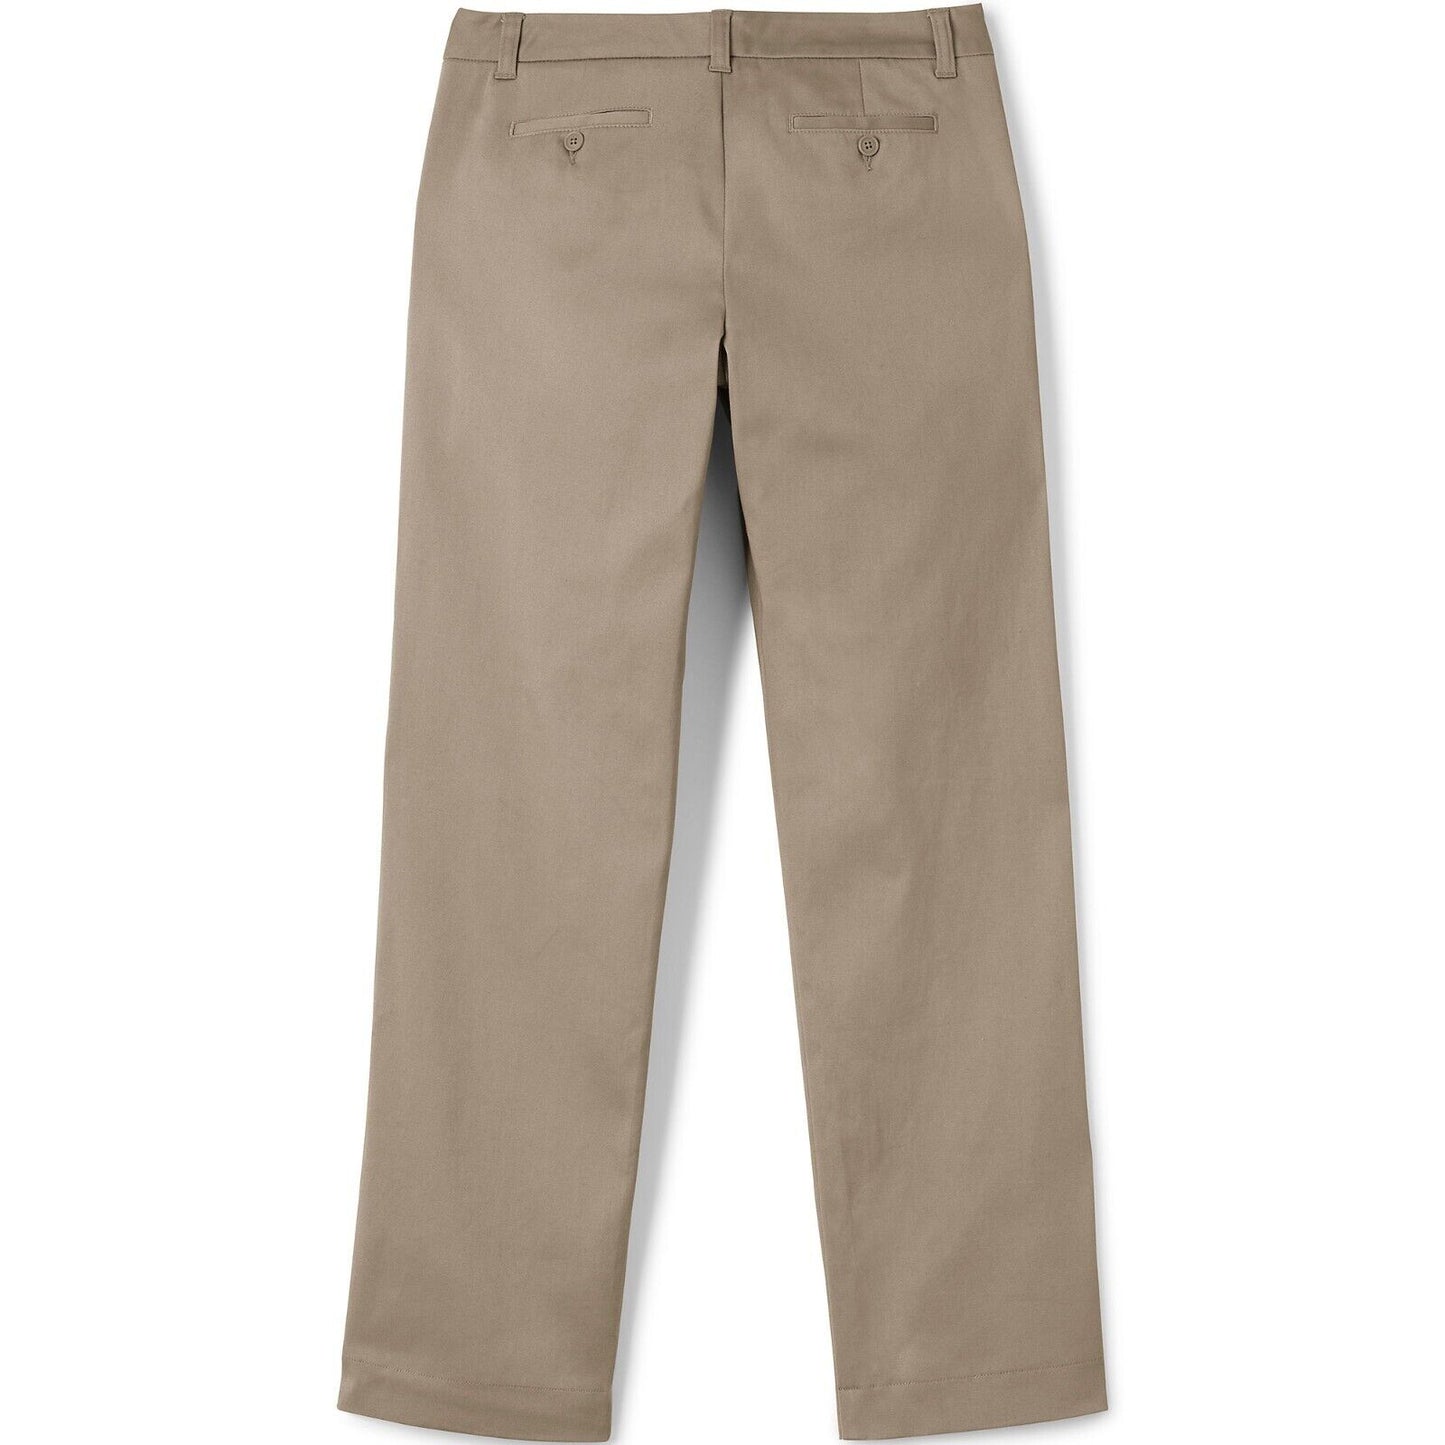 Women's Plain Front Stretch Chino Pants size 12